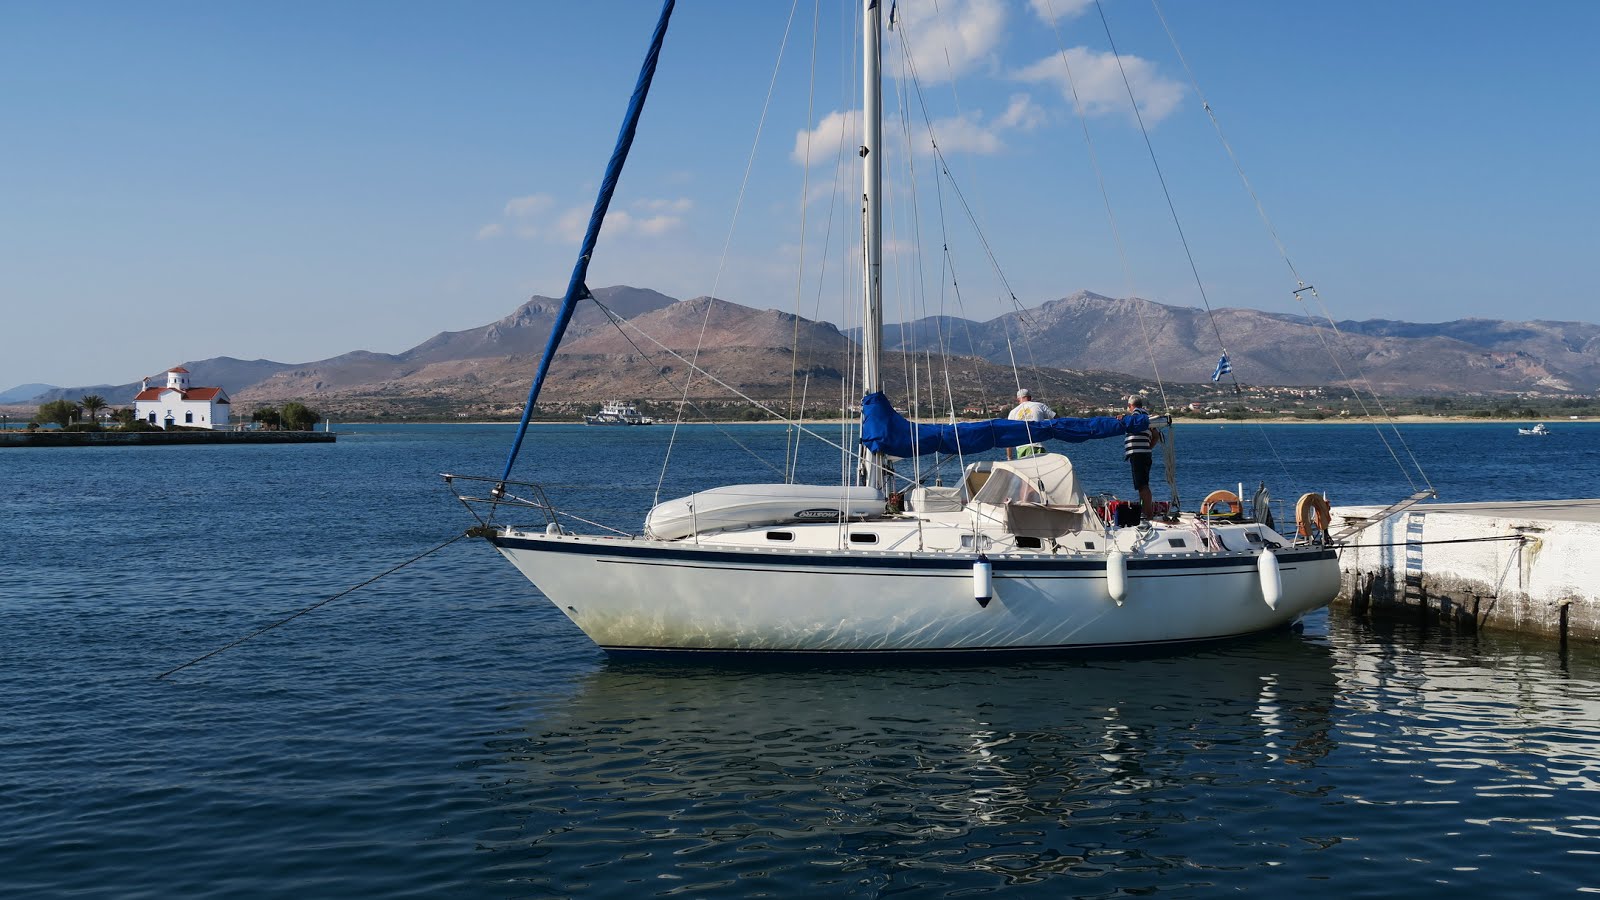 Rania Peloponnese Sailing 2016